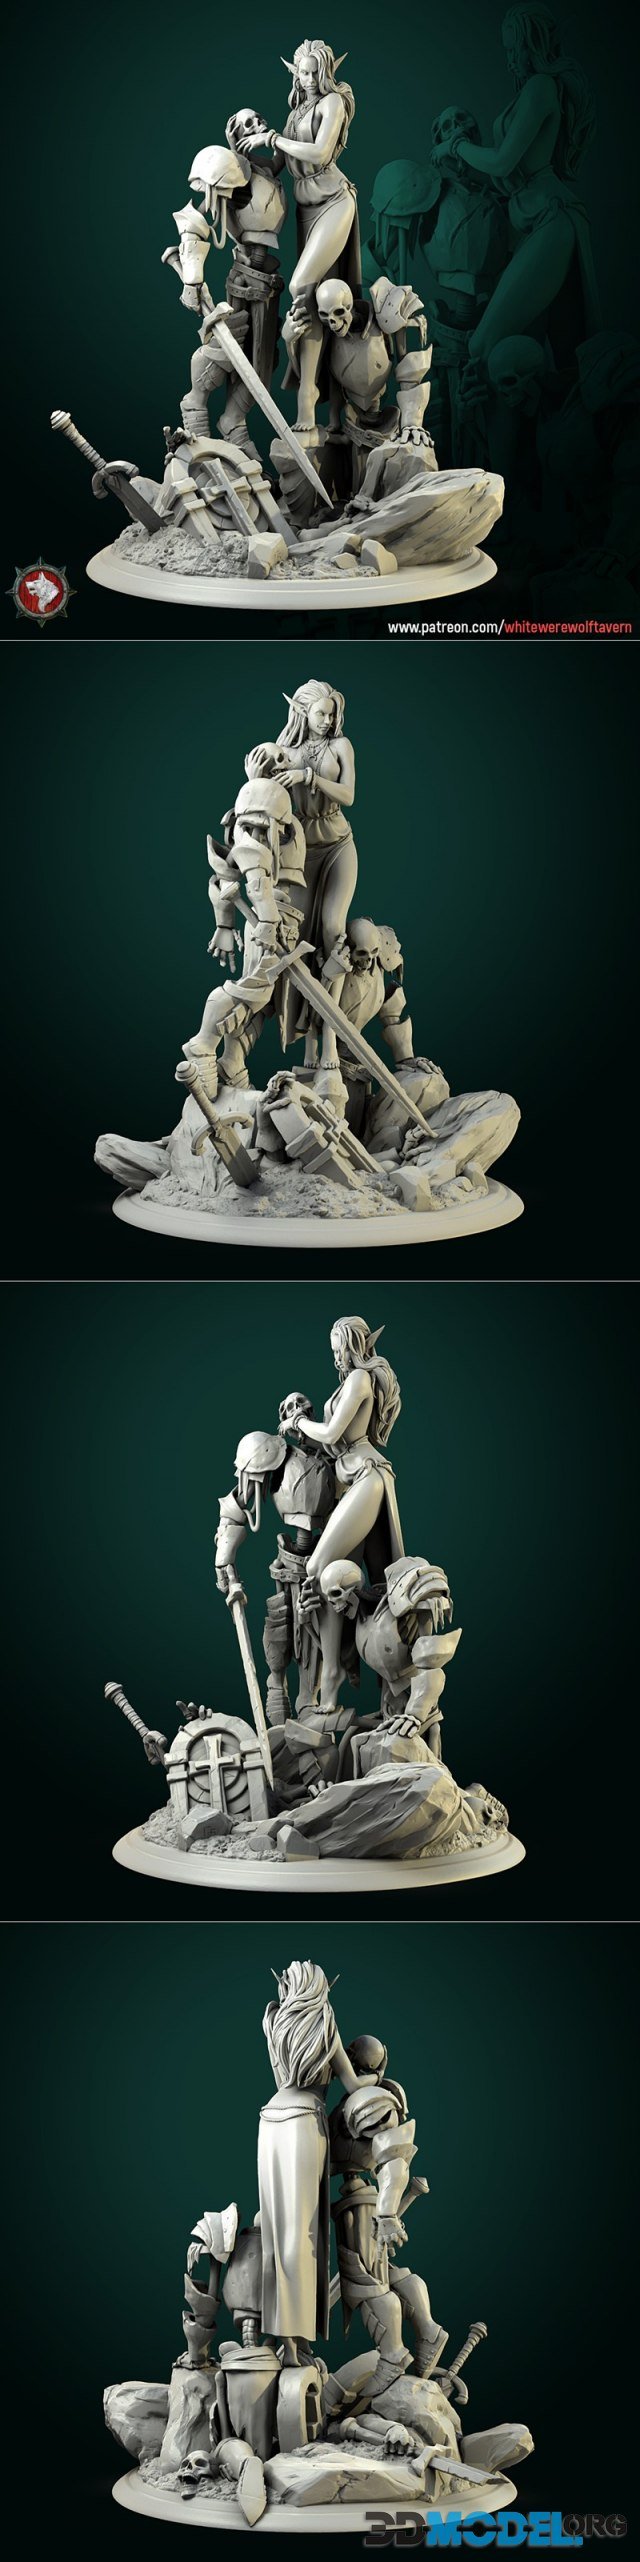 Diorama Laedria the Necromancer with skeletons – Printable